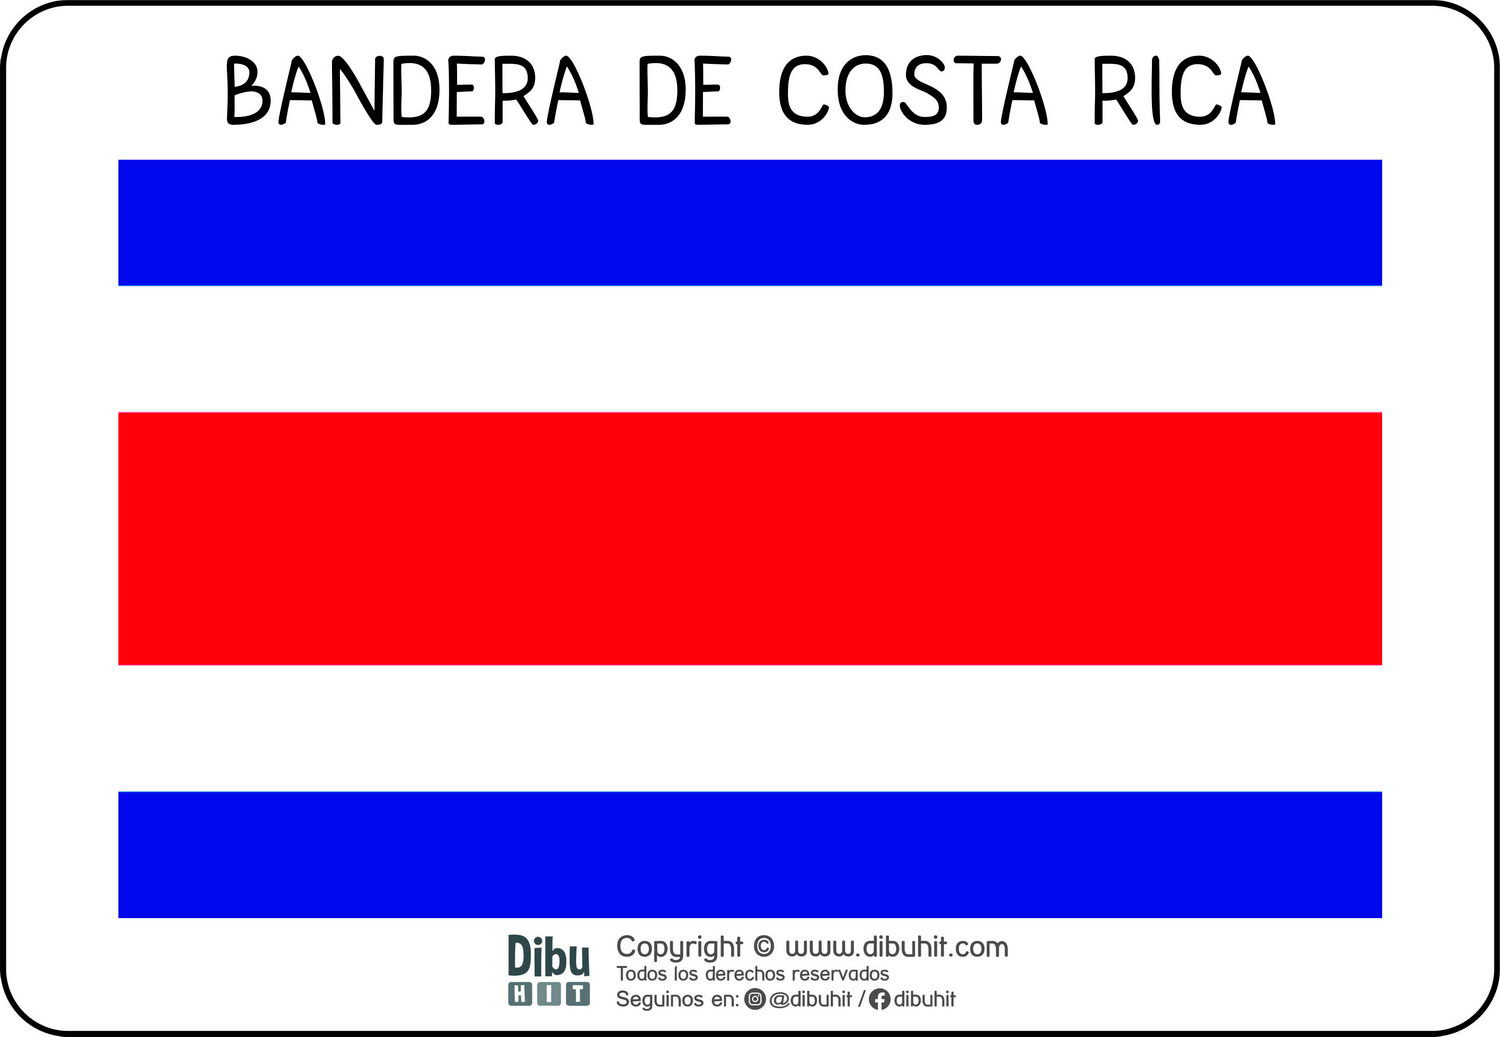 Lamina didactica bandera de Costa Rica a colores